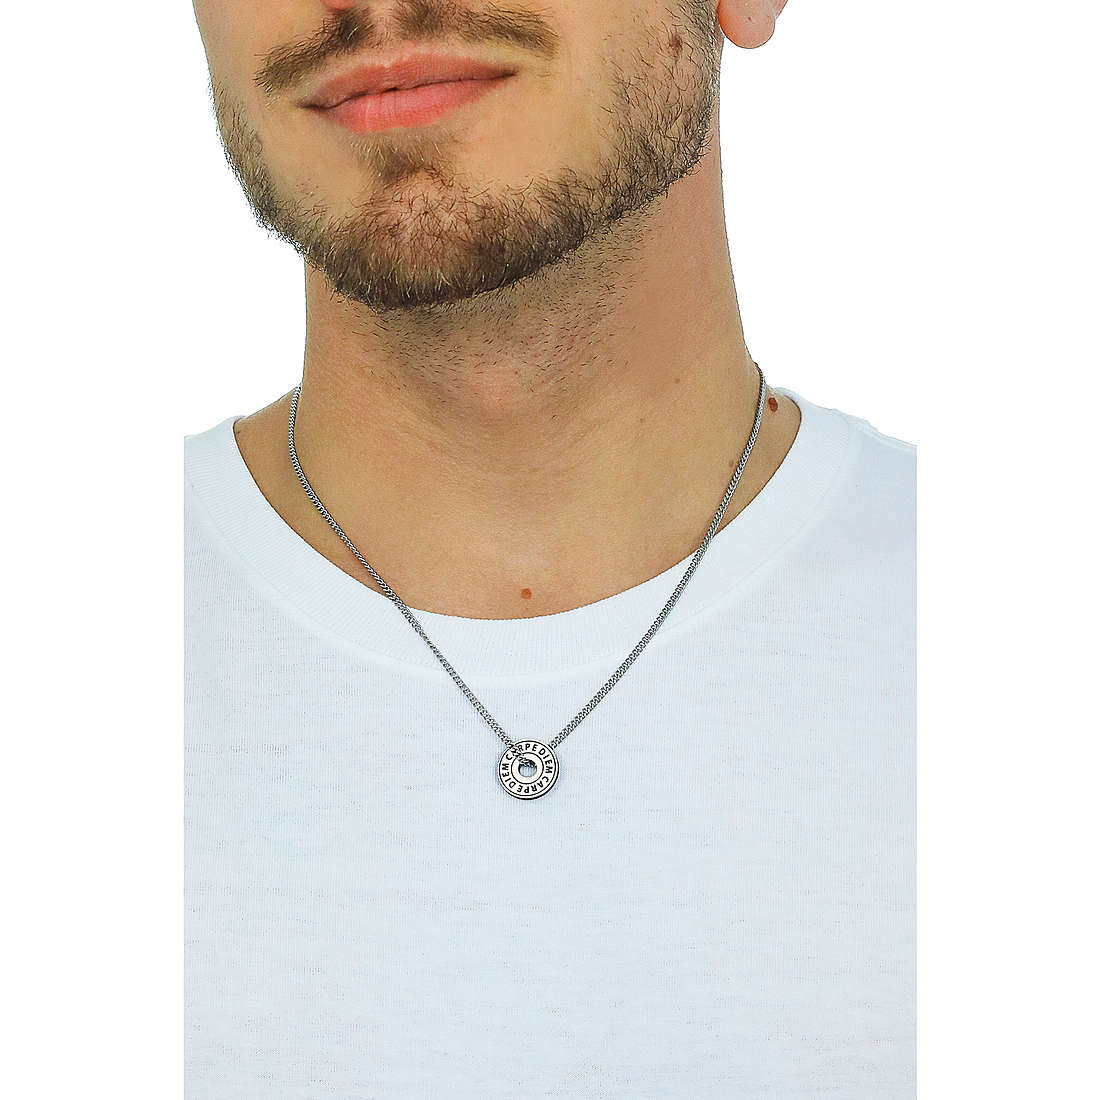 Kidult necklaces Philosophy man 751215 wearing